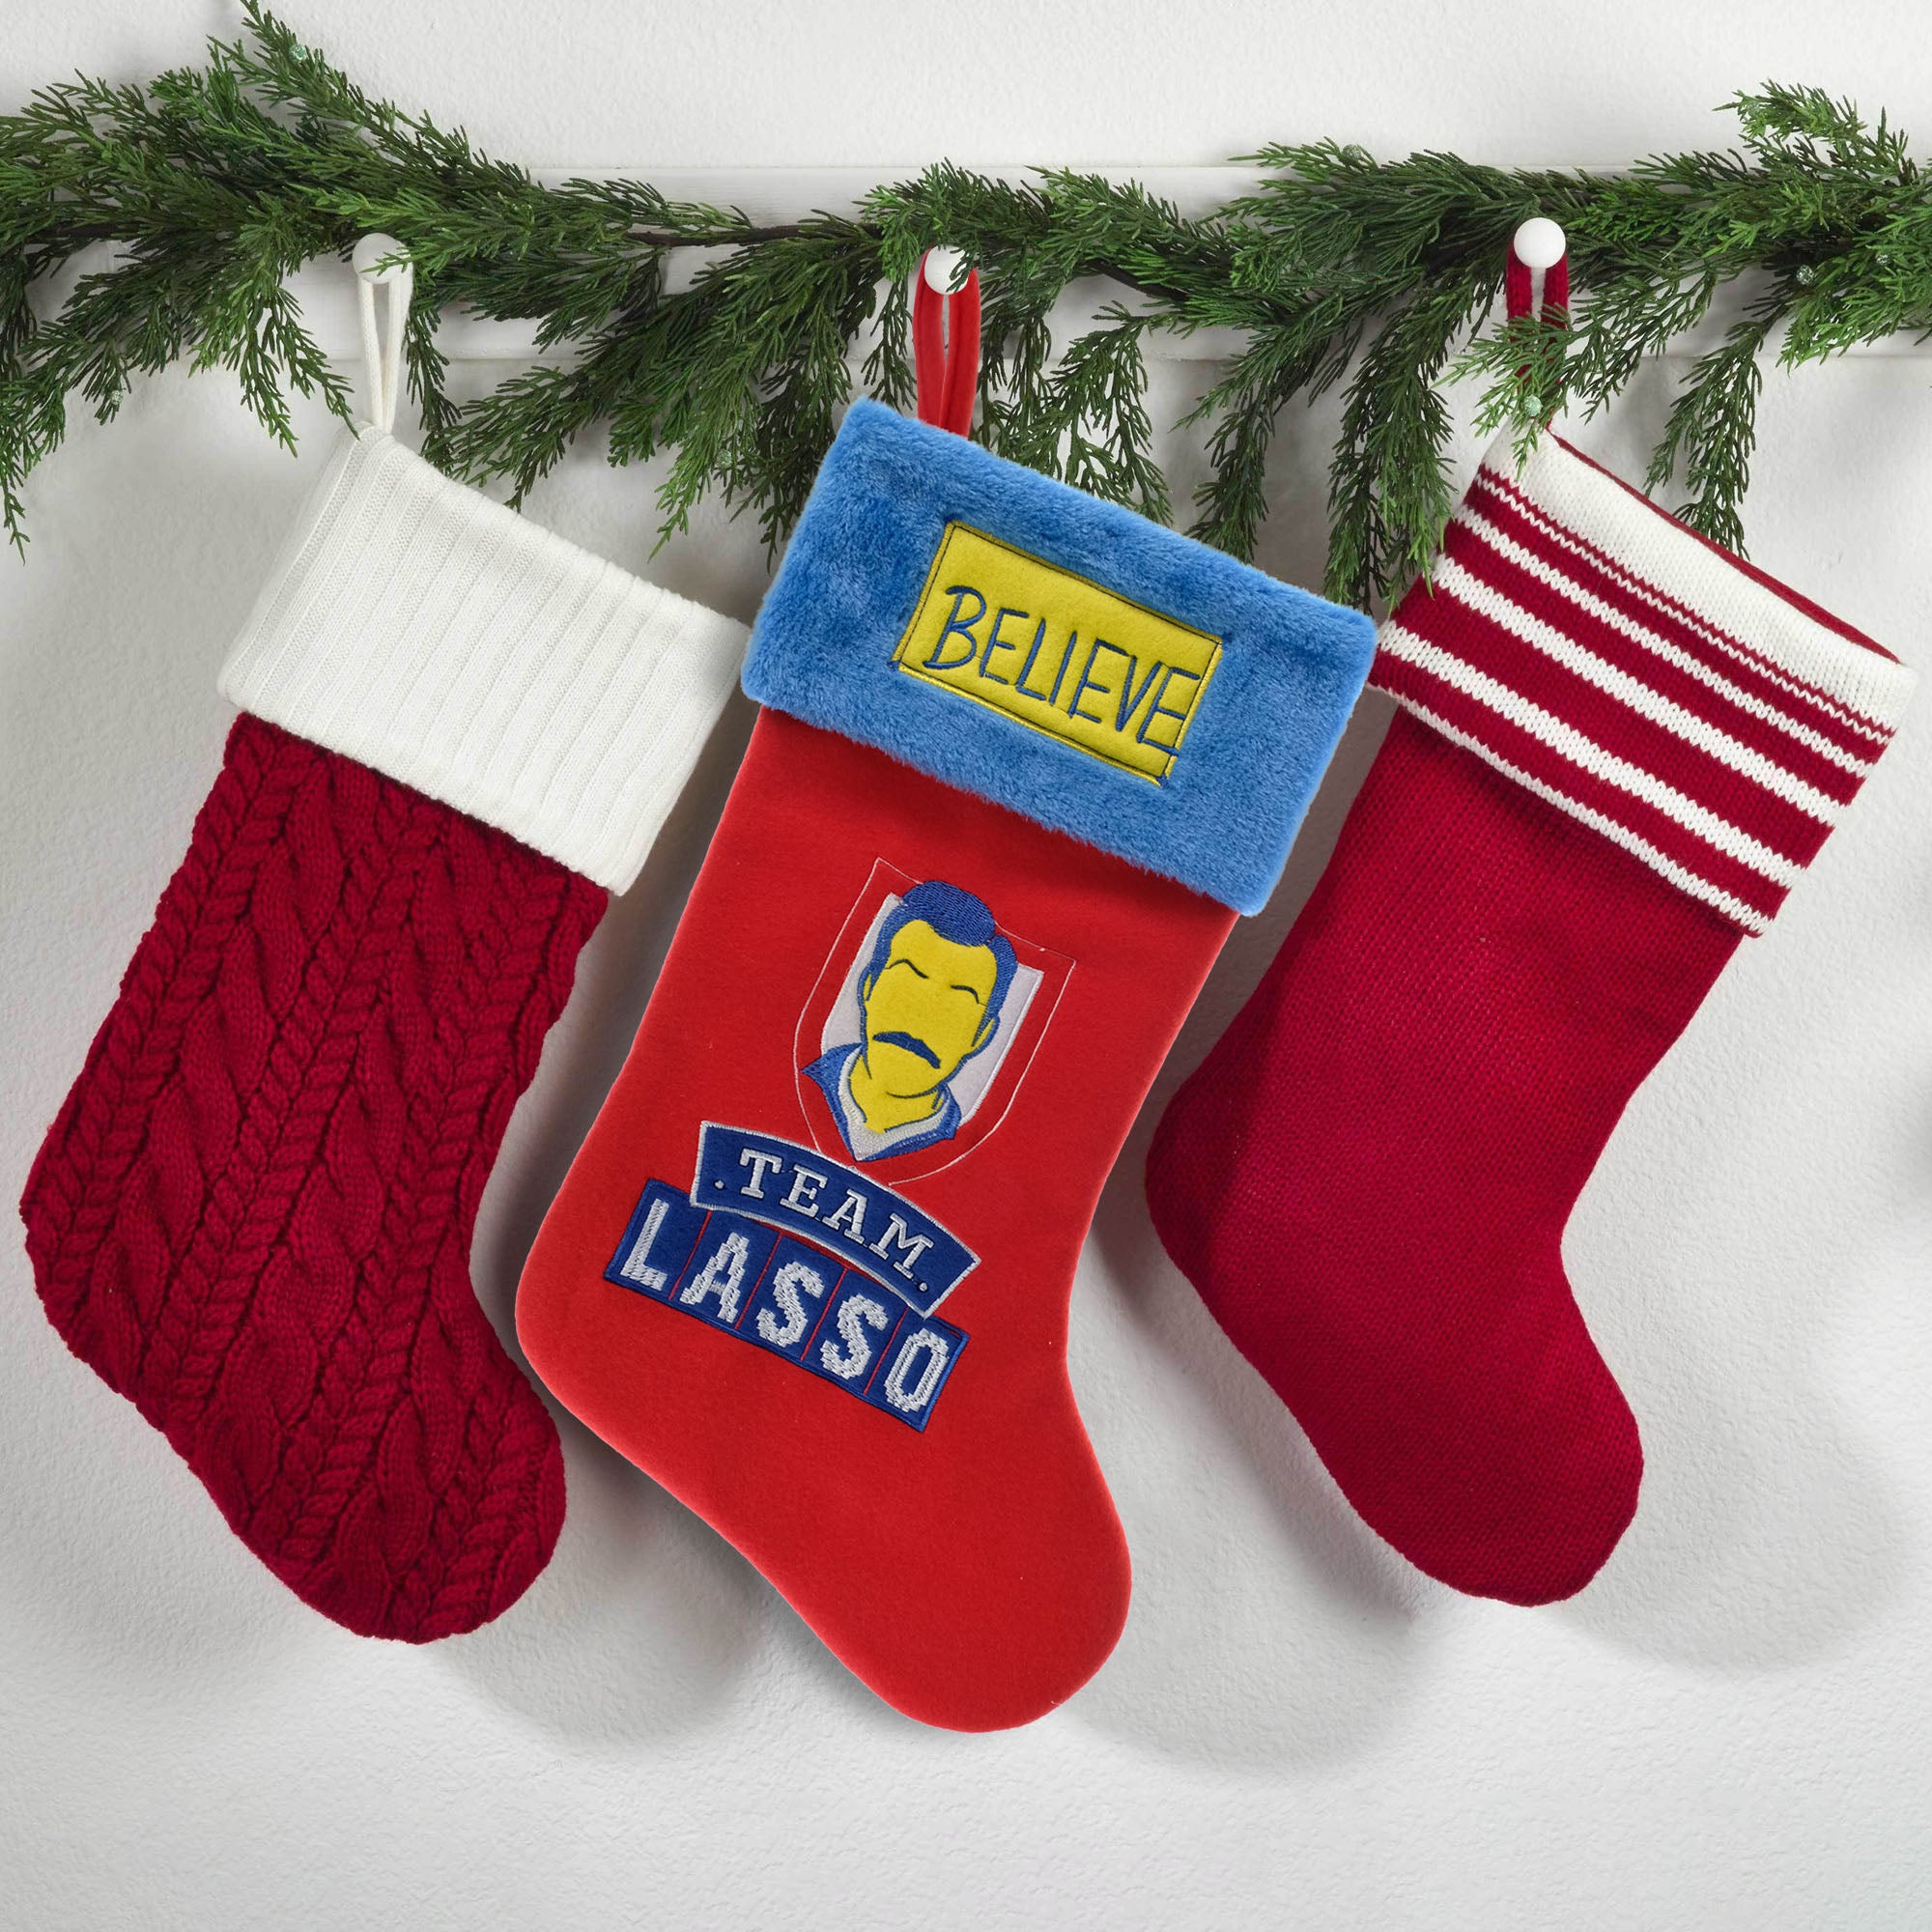 Encanto Christmas Stockings 